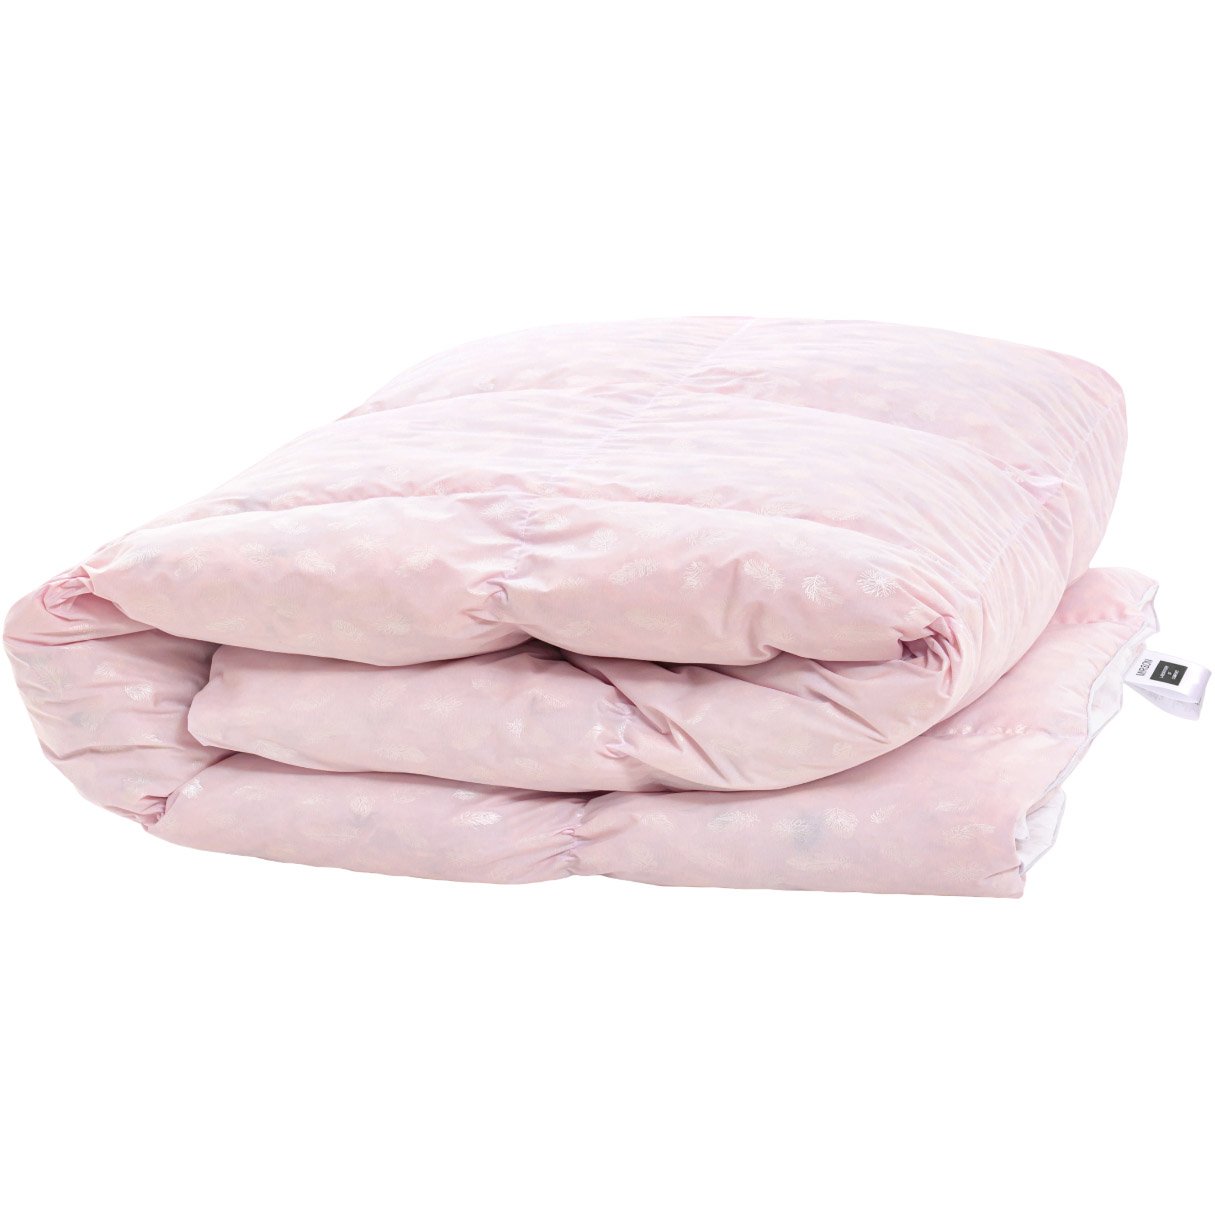 Одеяло пуховое MirSon Karmen №1853 Bio-Pink, 50% пух, двуспальное, 205x172, розовое (2200003014761) - фото 1